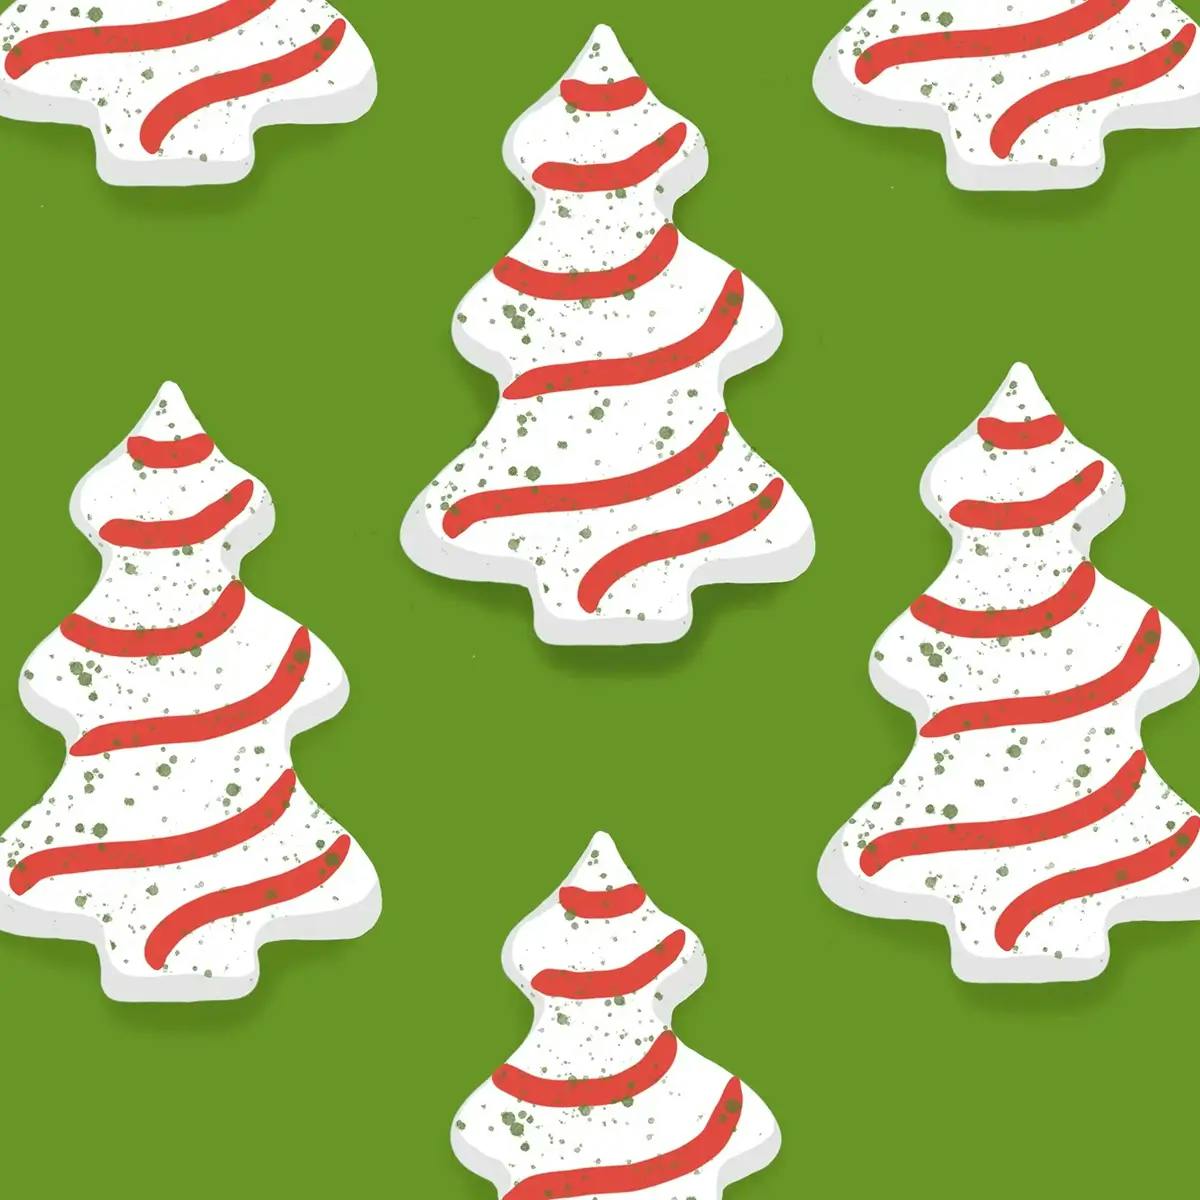 Illustration of Little Debbie Christmas Tree Cakes.